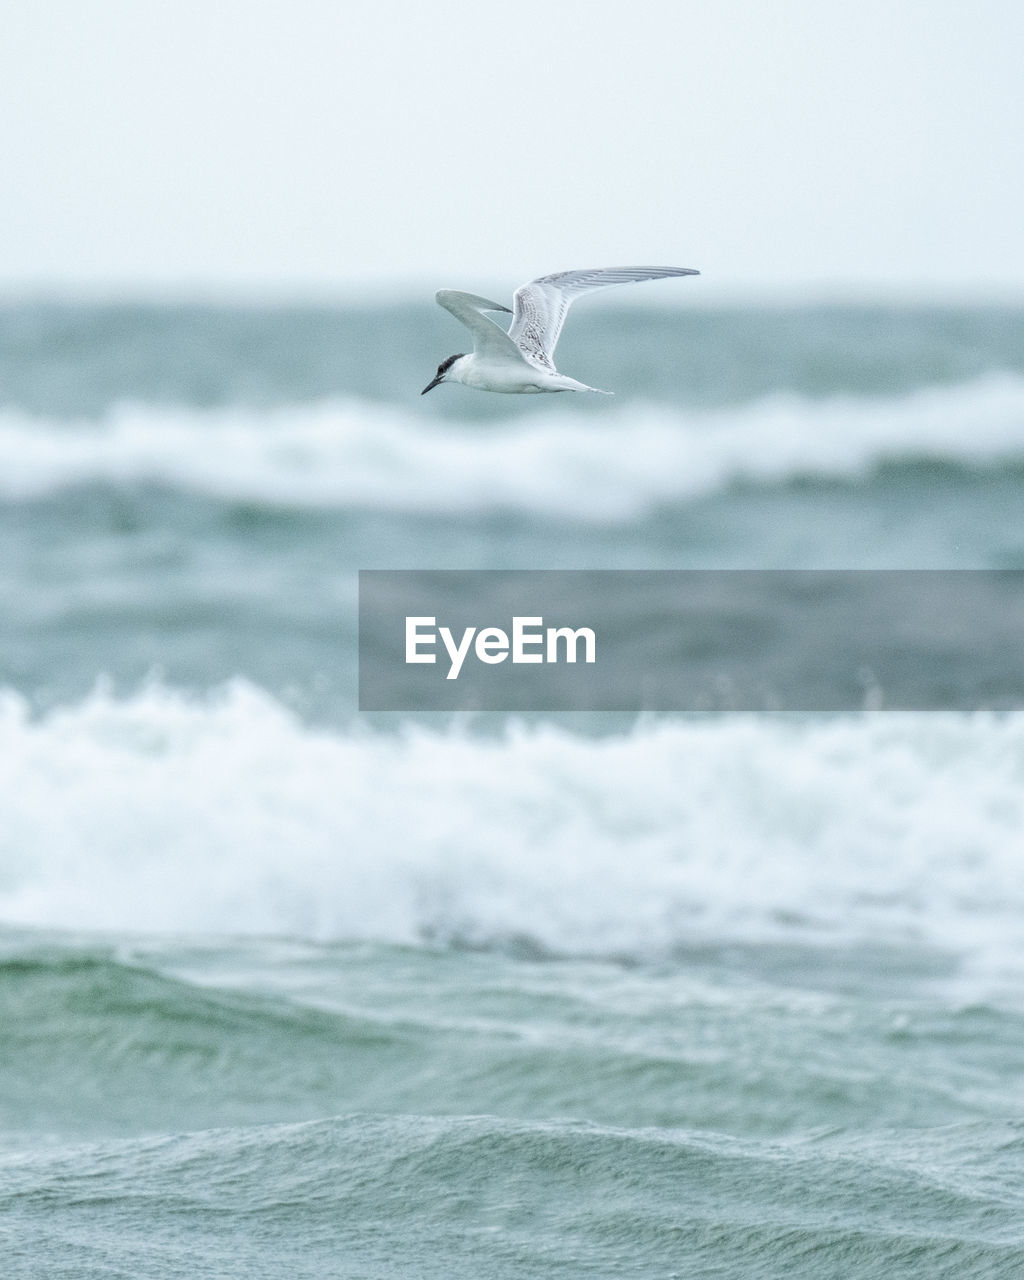 Hunting tern flying over sea